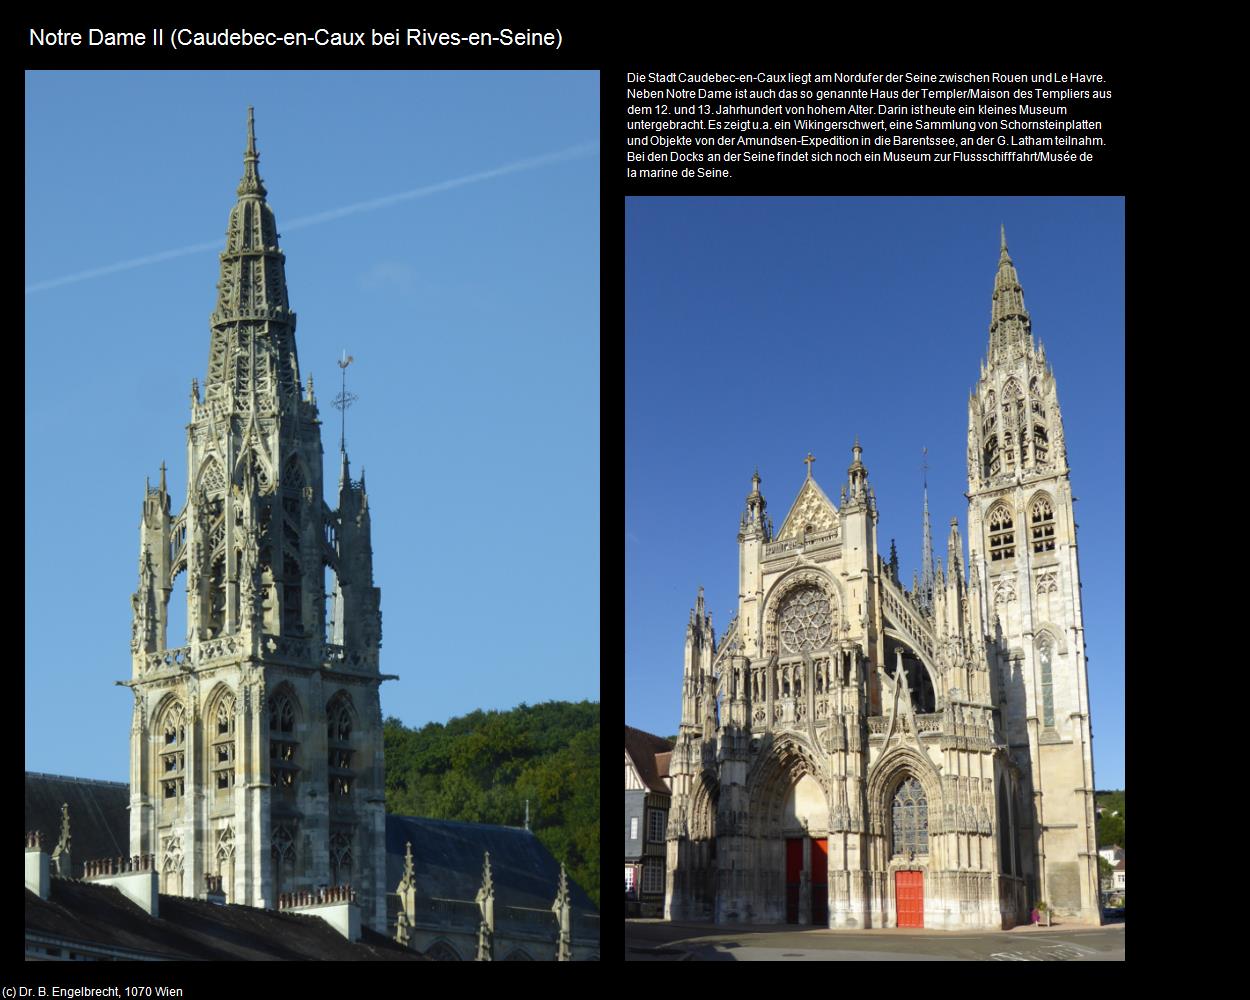 Notre Dame II (Caudebec-en-Caux) (Rives-en-Seine (FR-NOR) ) in Kulturatlas-FRANKREICH